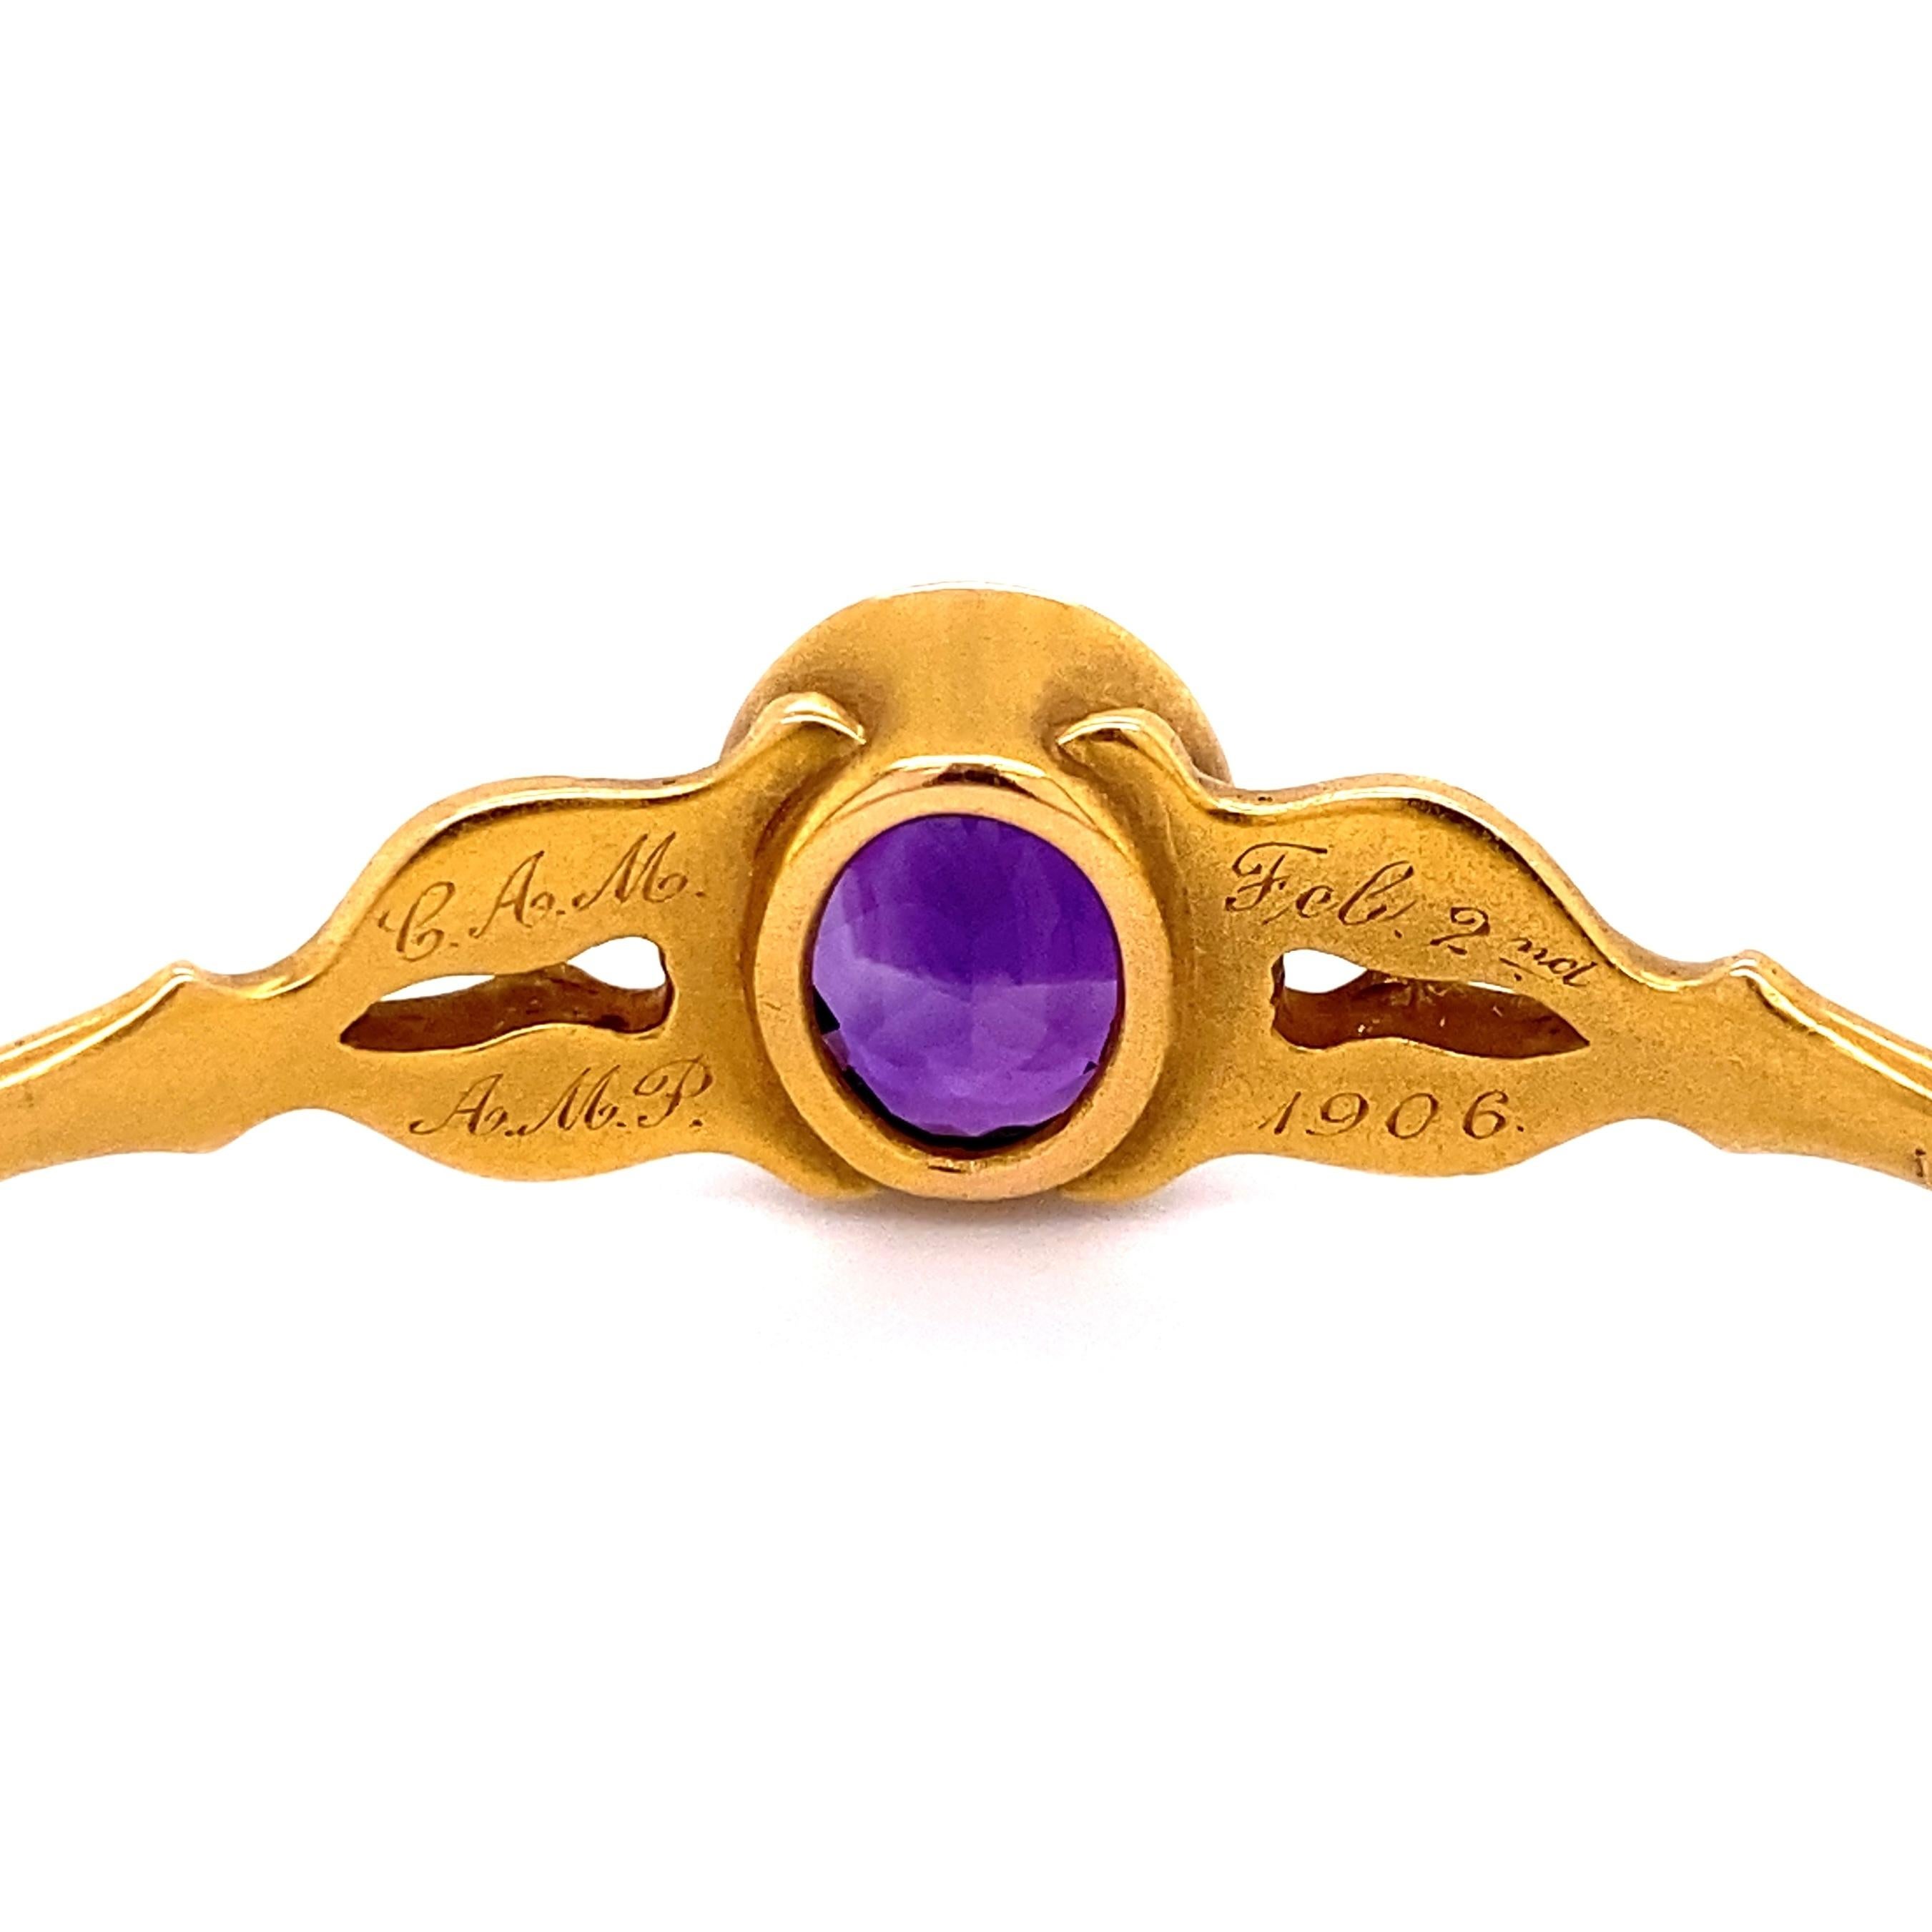 Shreve & Co Amethyst Gold Bangle Bracelet Circa 1906 Estate Fine Jewelry 2